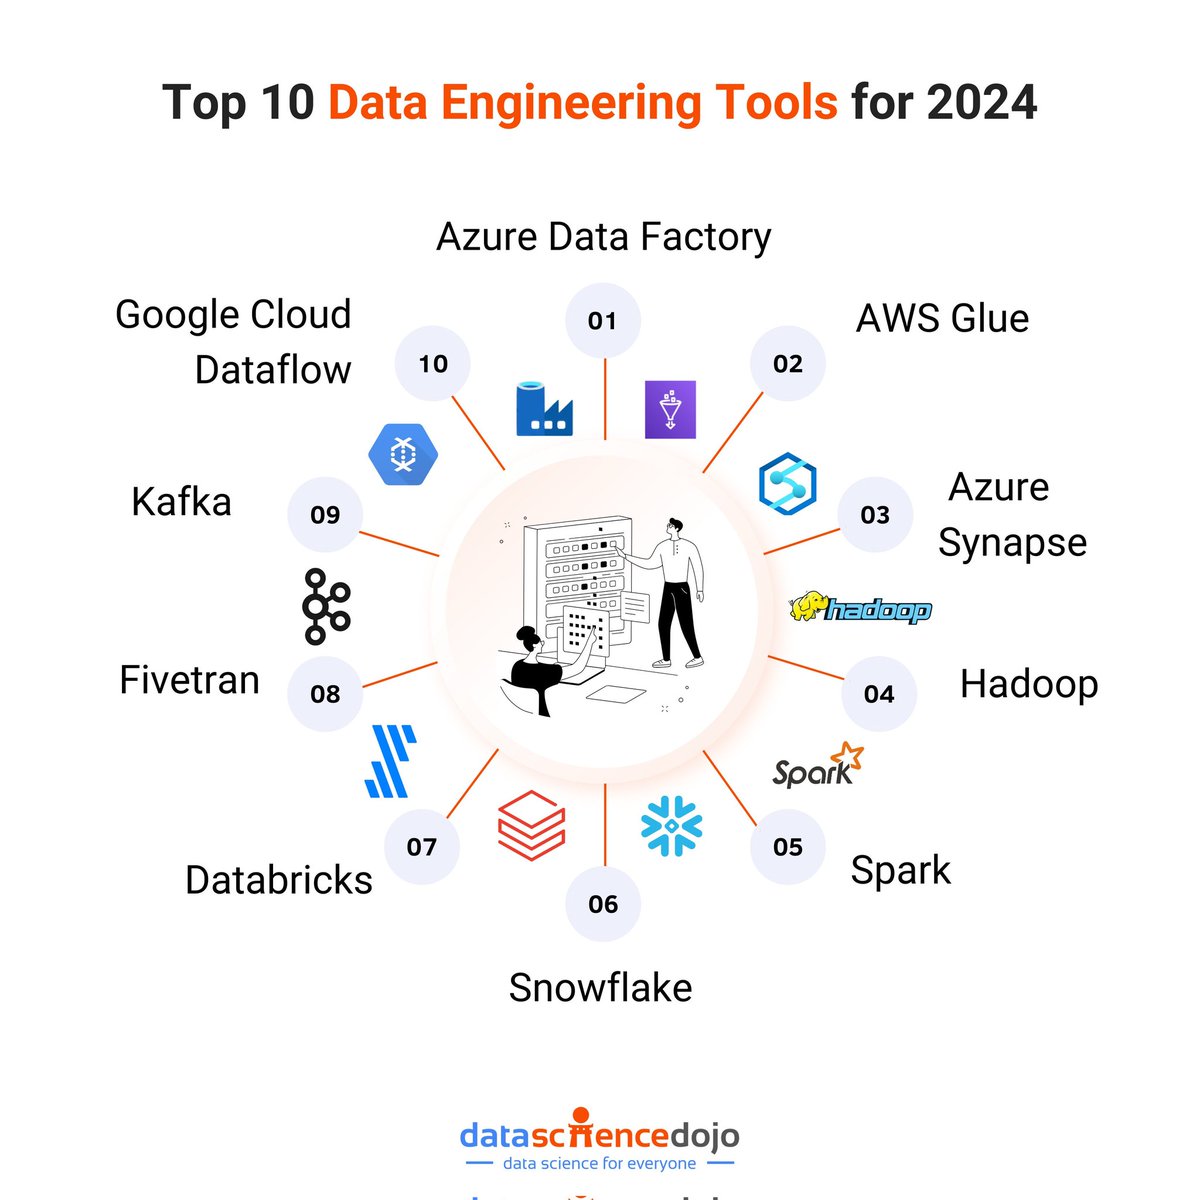 Top 10 data engineering tools for 2024! #AI #MachineLearning #DeepLearning #DataScience #BigData #Datalake #NLP #GenerativeAI #LLMs #OpenAI #Python #Code #100DaysOfCode @DataScienceDojo datasciencedojo.com/blog/data-engi… @SpirosMargaris @PawlowskiMario @mvollmer1 @gvalan @ipfconline1